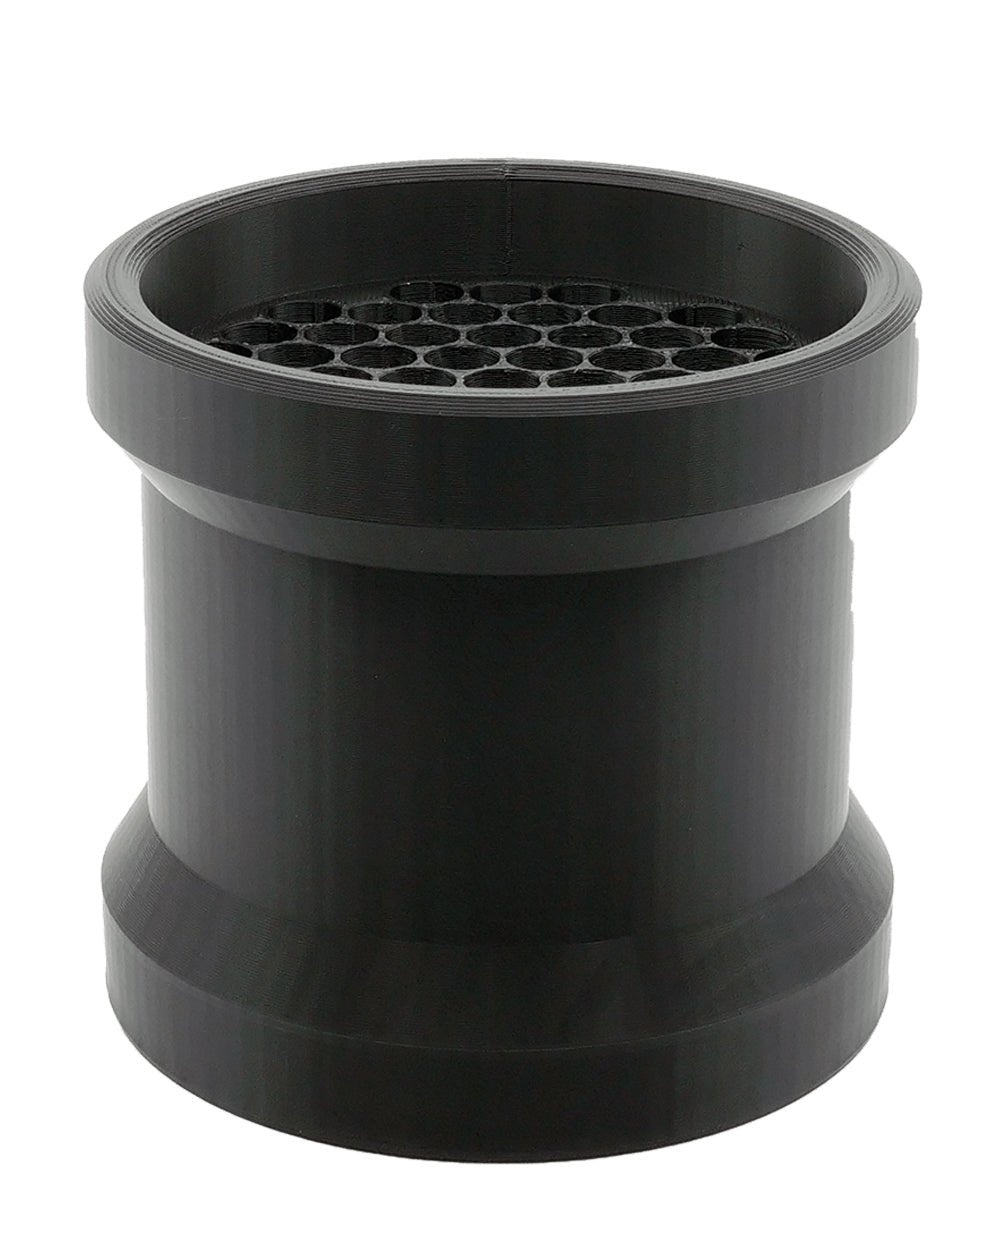 HUMBOLDT | Black Pre-Rolled Cones Filling Machine Starter Kit 98mm | Fill 55 Cones Per Run - 3